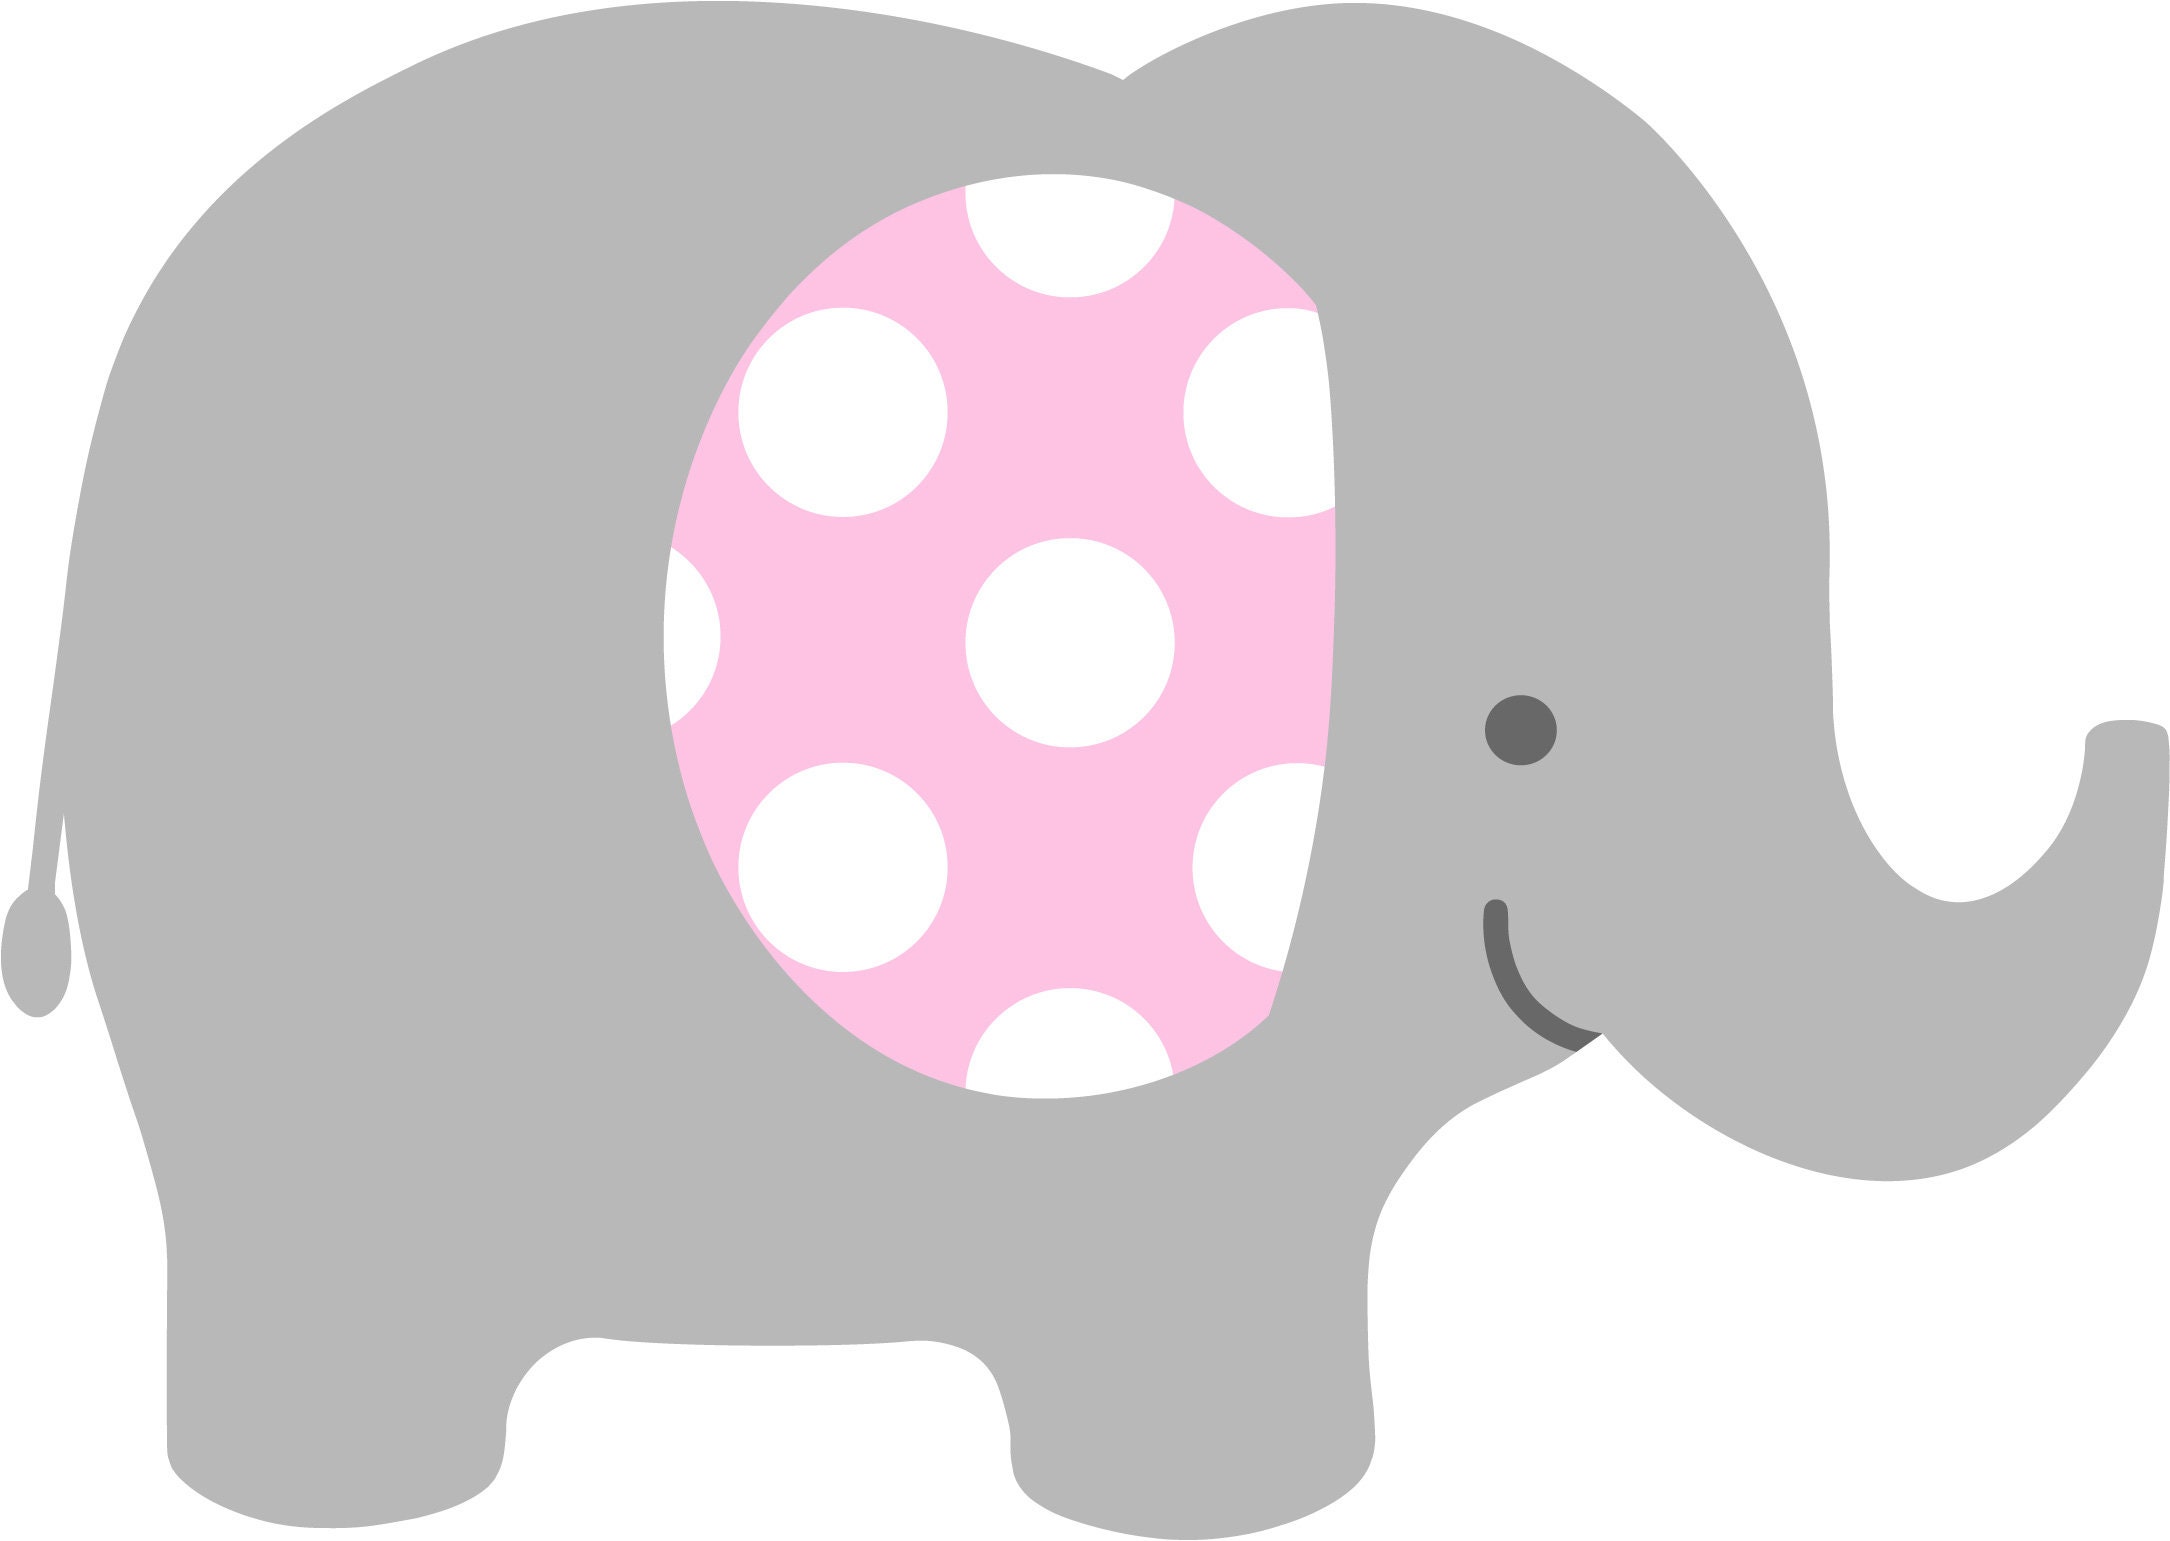 grey baby elephant clipart